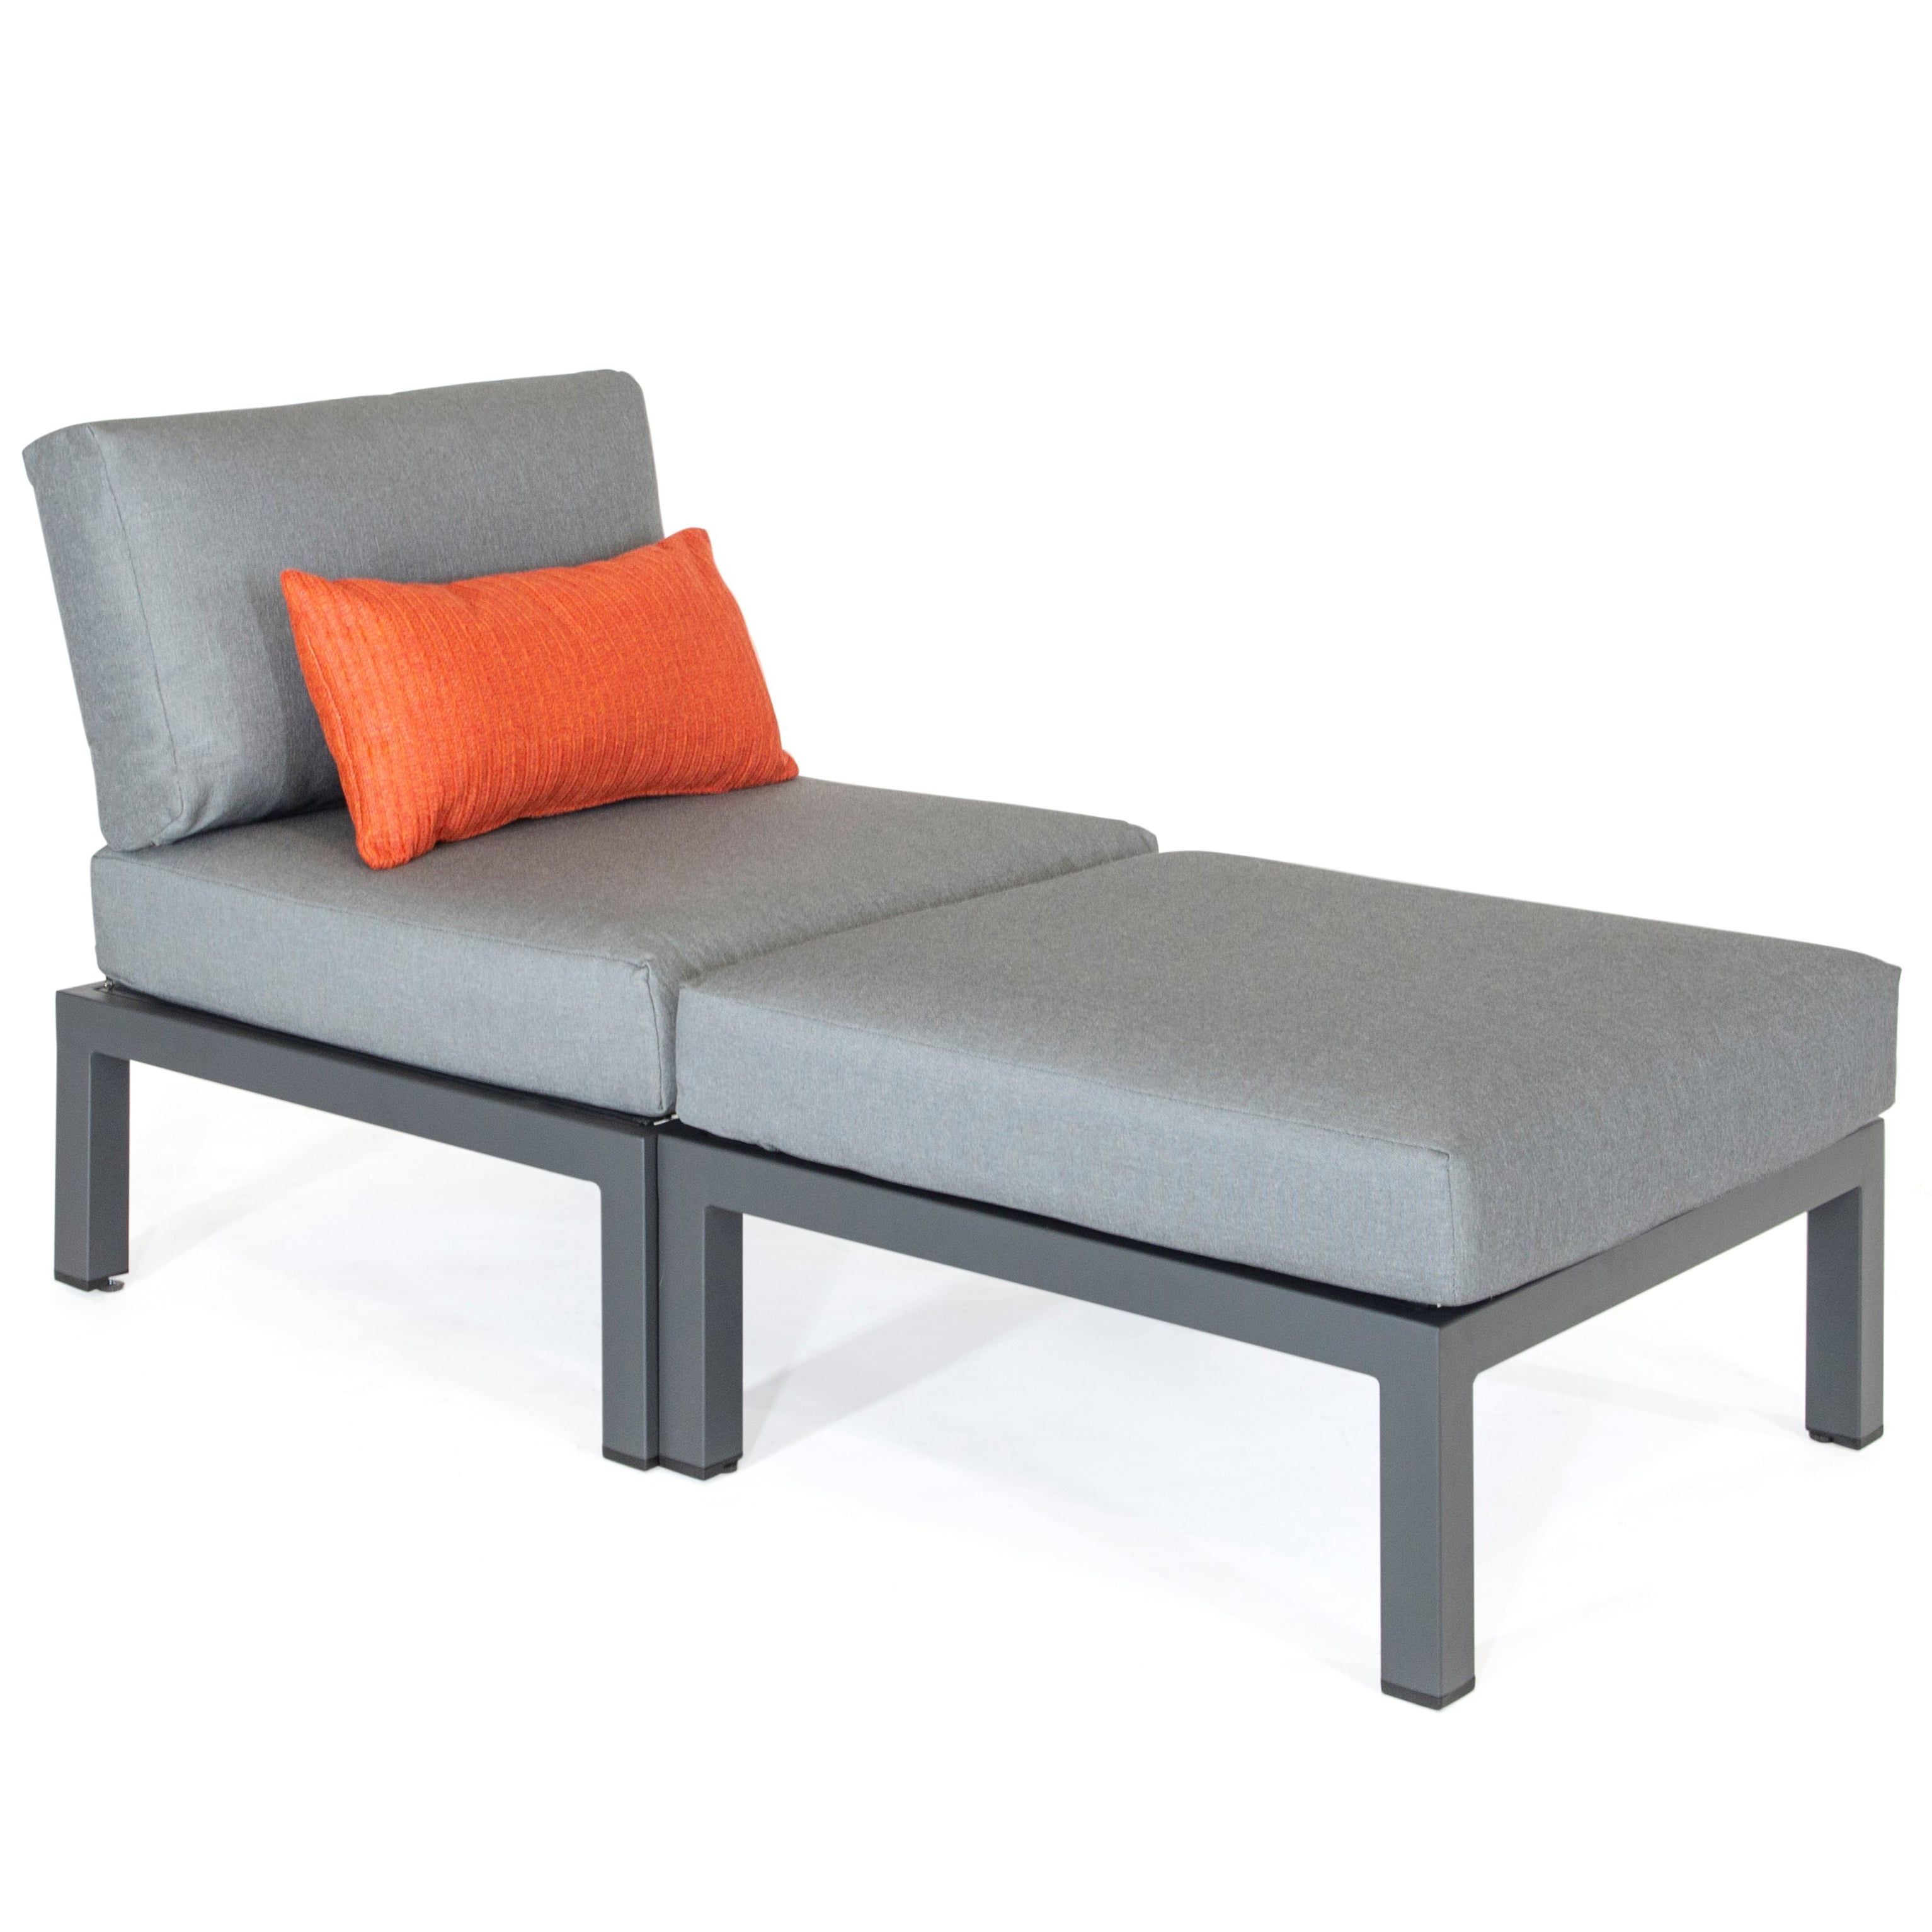 Elba Aluminum Lounge Ottoman With Cushion